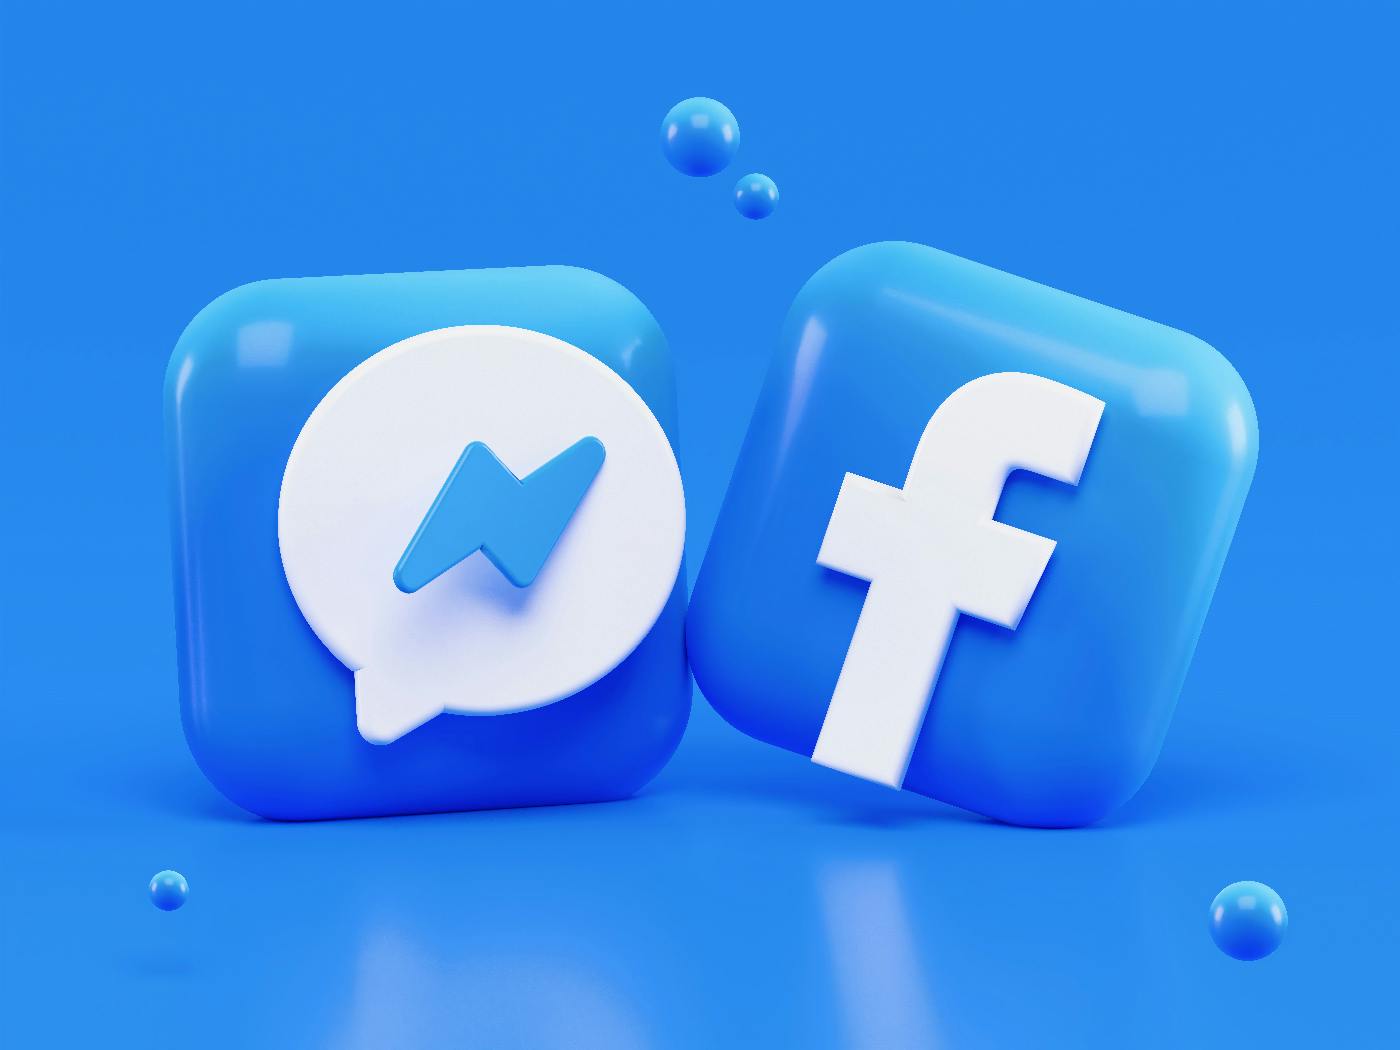 Blue and white social media symbols.